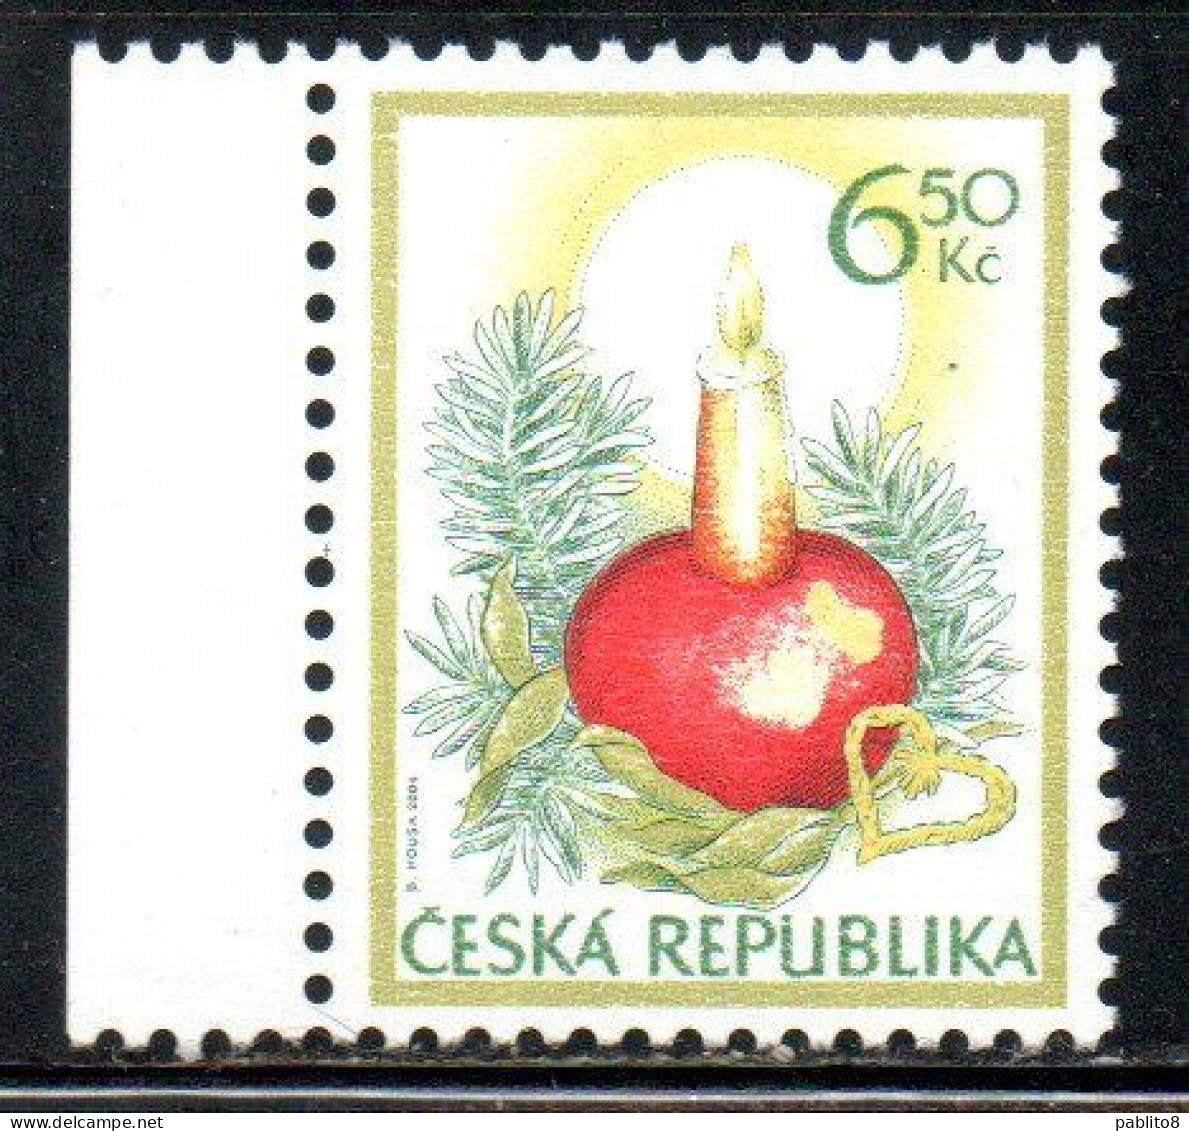 CZECH REPUBLIC CECA REPUBBLICA CZECHOSLOVAKIA 2004 CHRISTMAS NATALE NOEL WEIHNACHTEN NAVIDAD 6.50k MNH - Unused Stamps